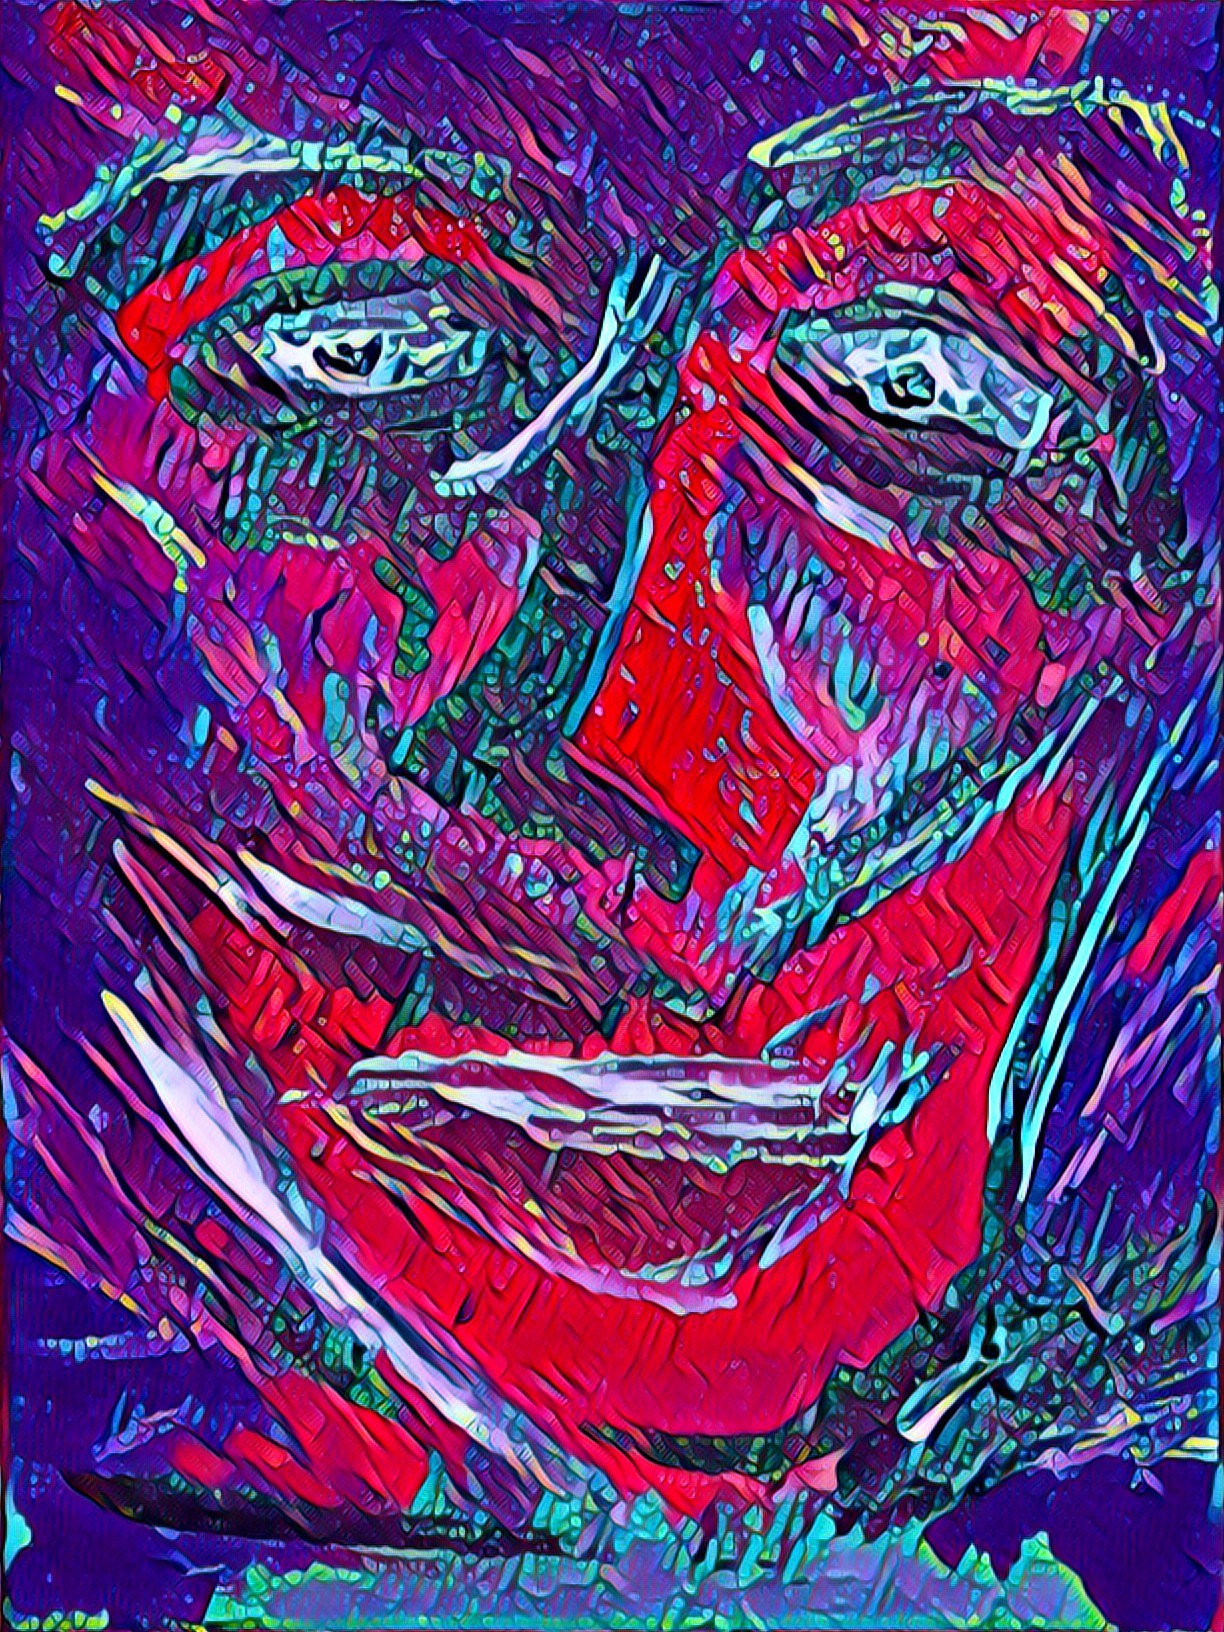 The Joker in Man #33: Weeping